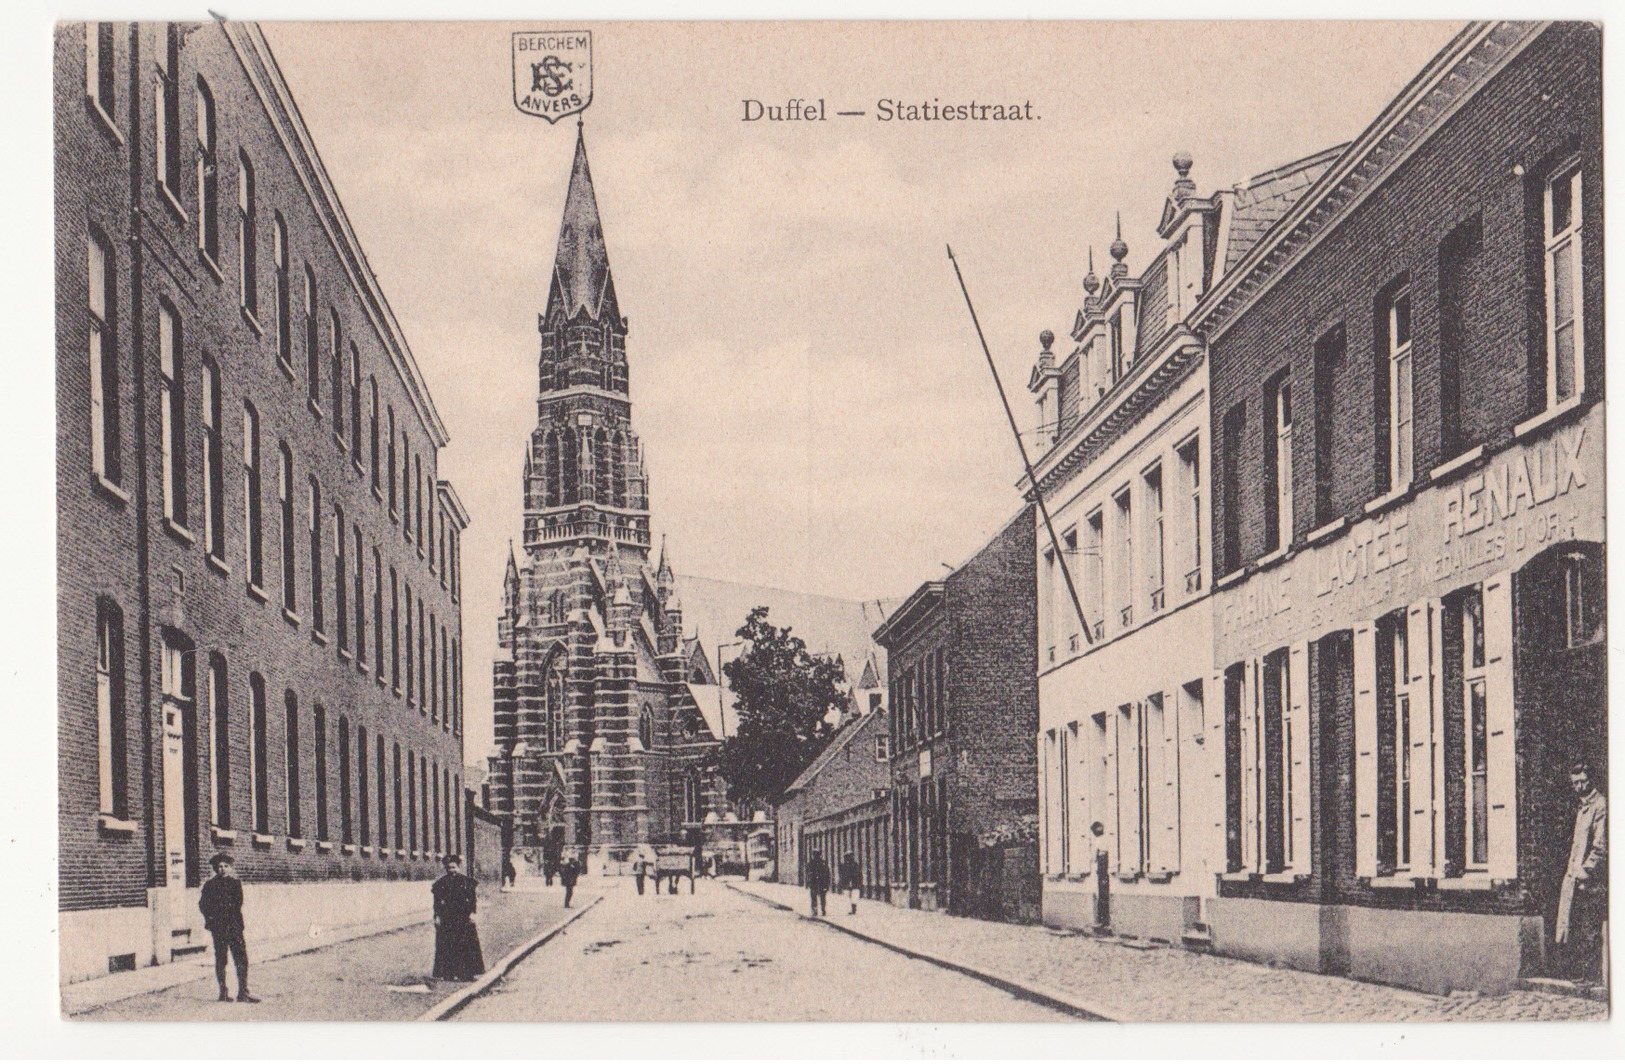 Duffel: Statiestraat. (Erster Weltkrieg,1915) - Duffel